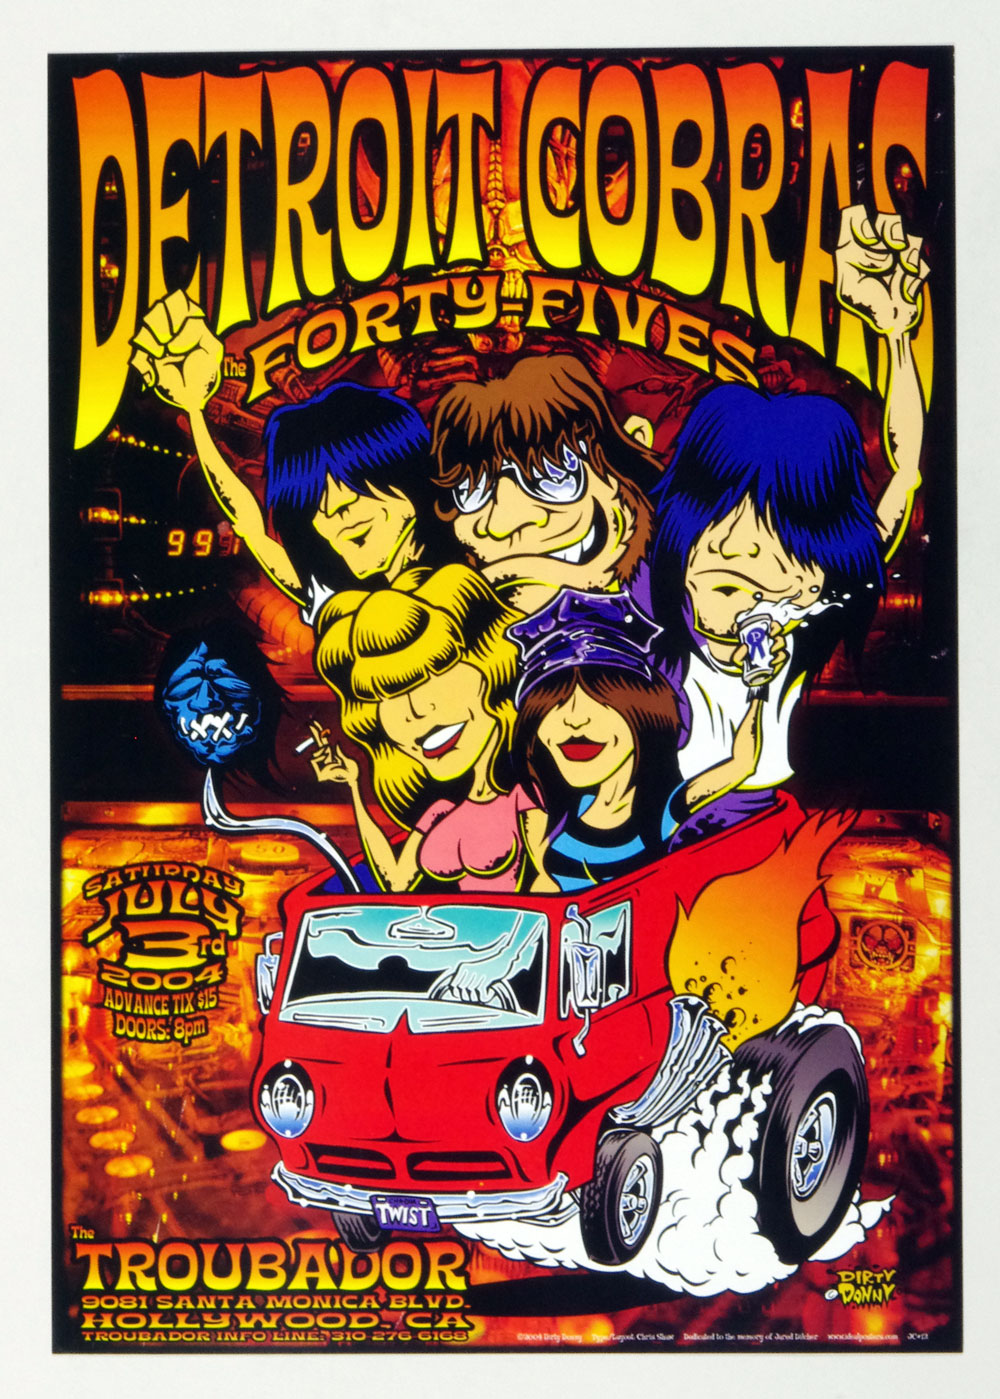 Detroit Cobras Poster 2004 July 3 The Troubador Hollywood